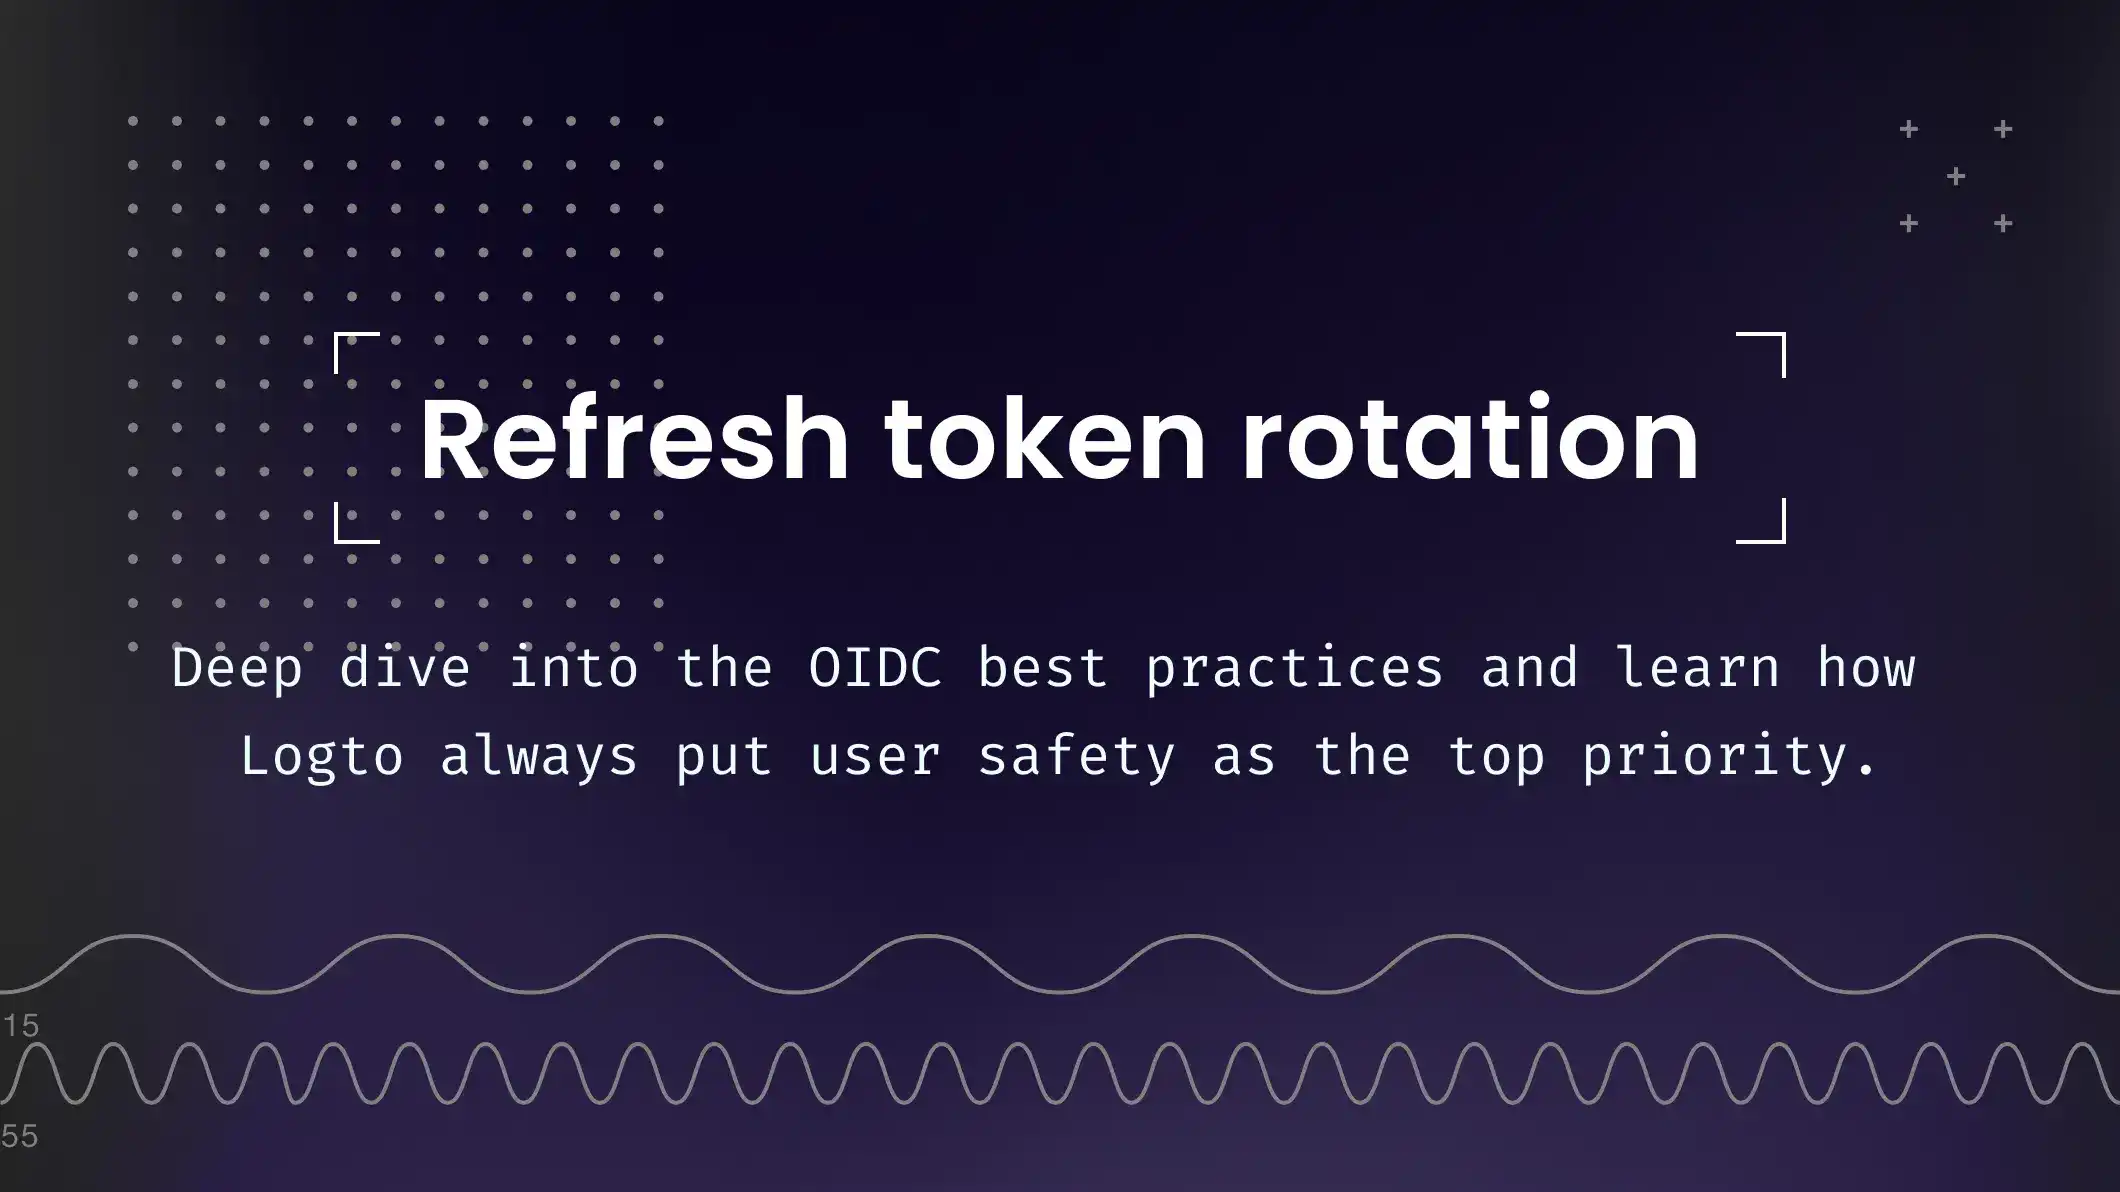 Understanding refresh token rotation